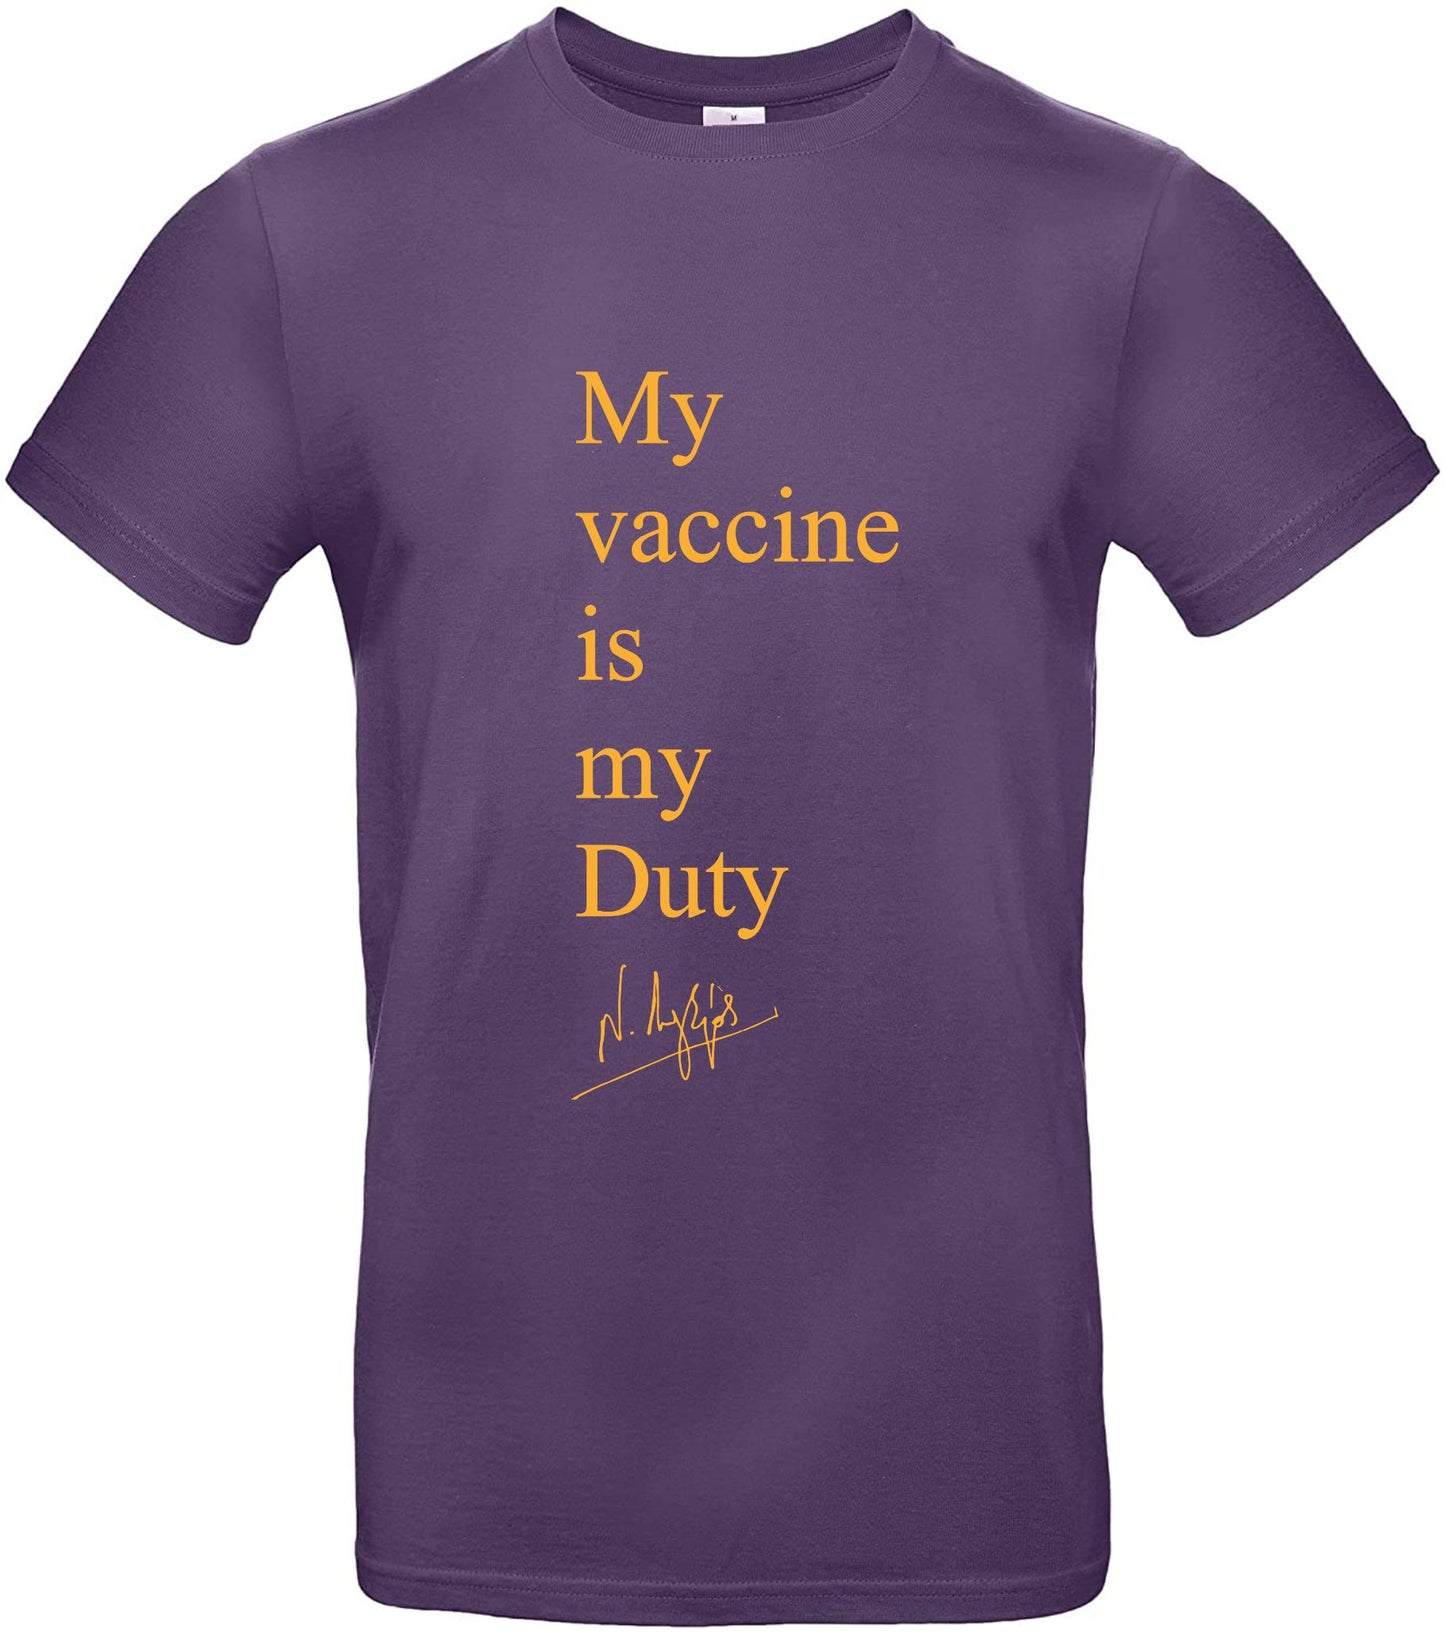 My vaccine is my Duty.